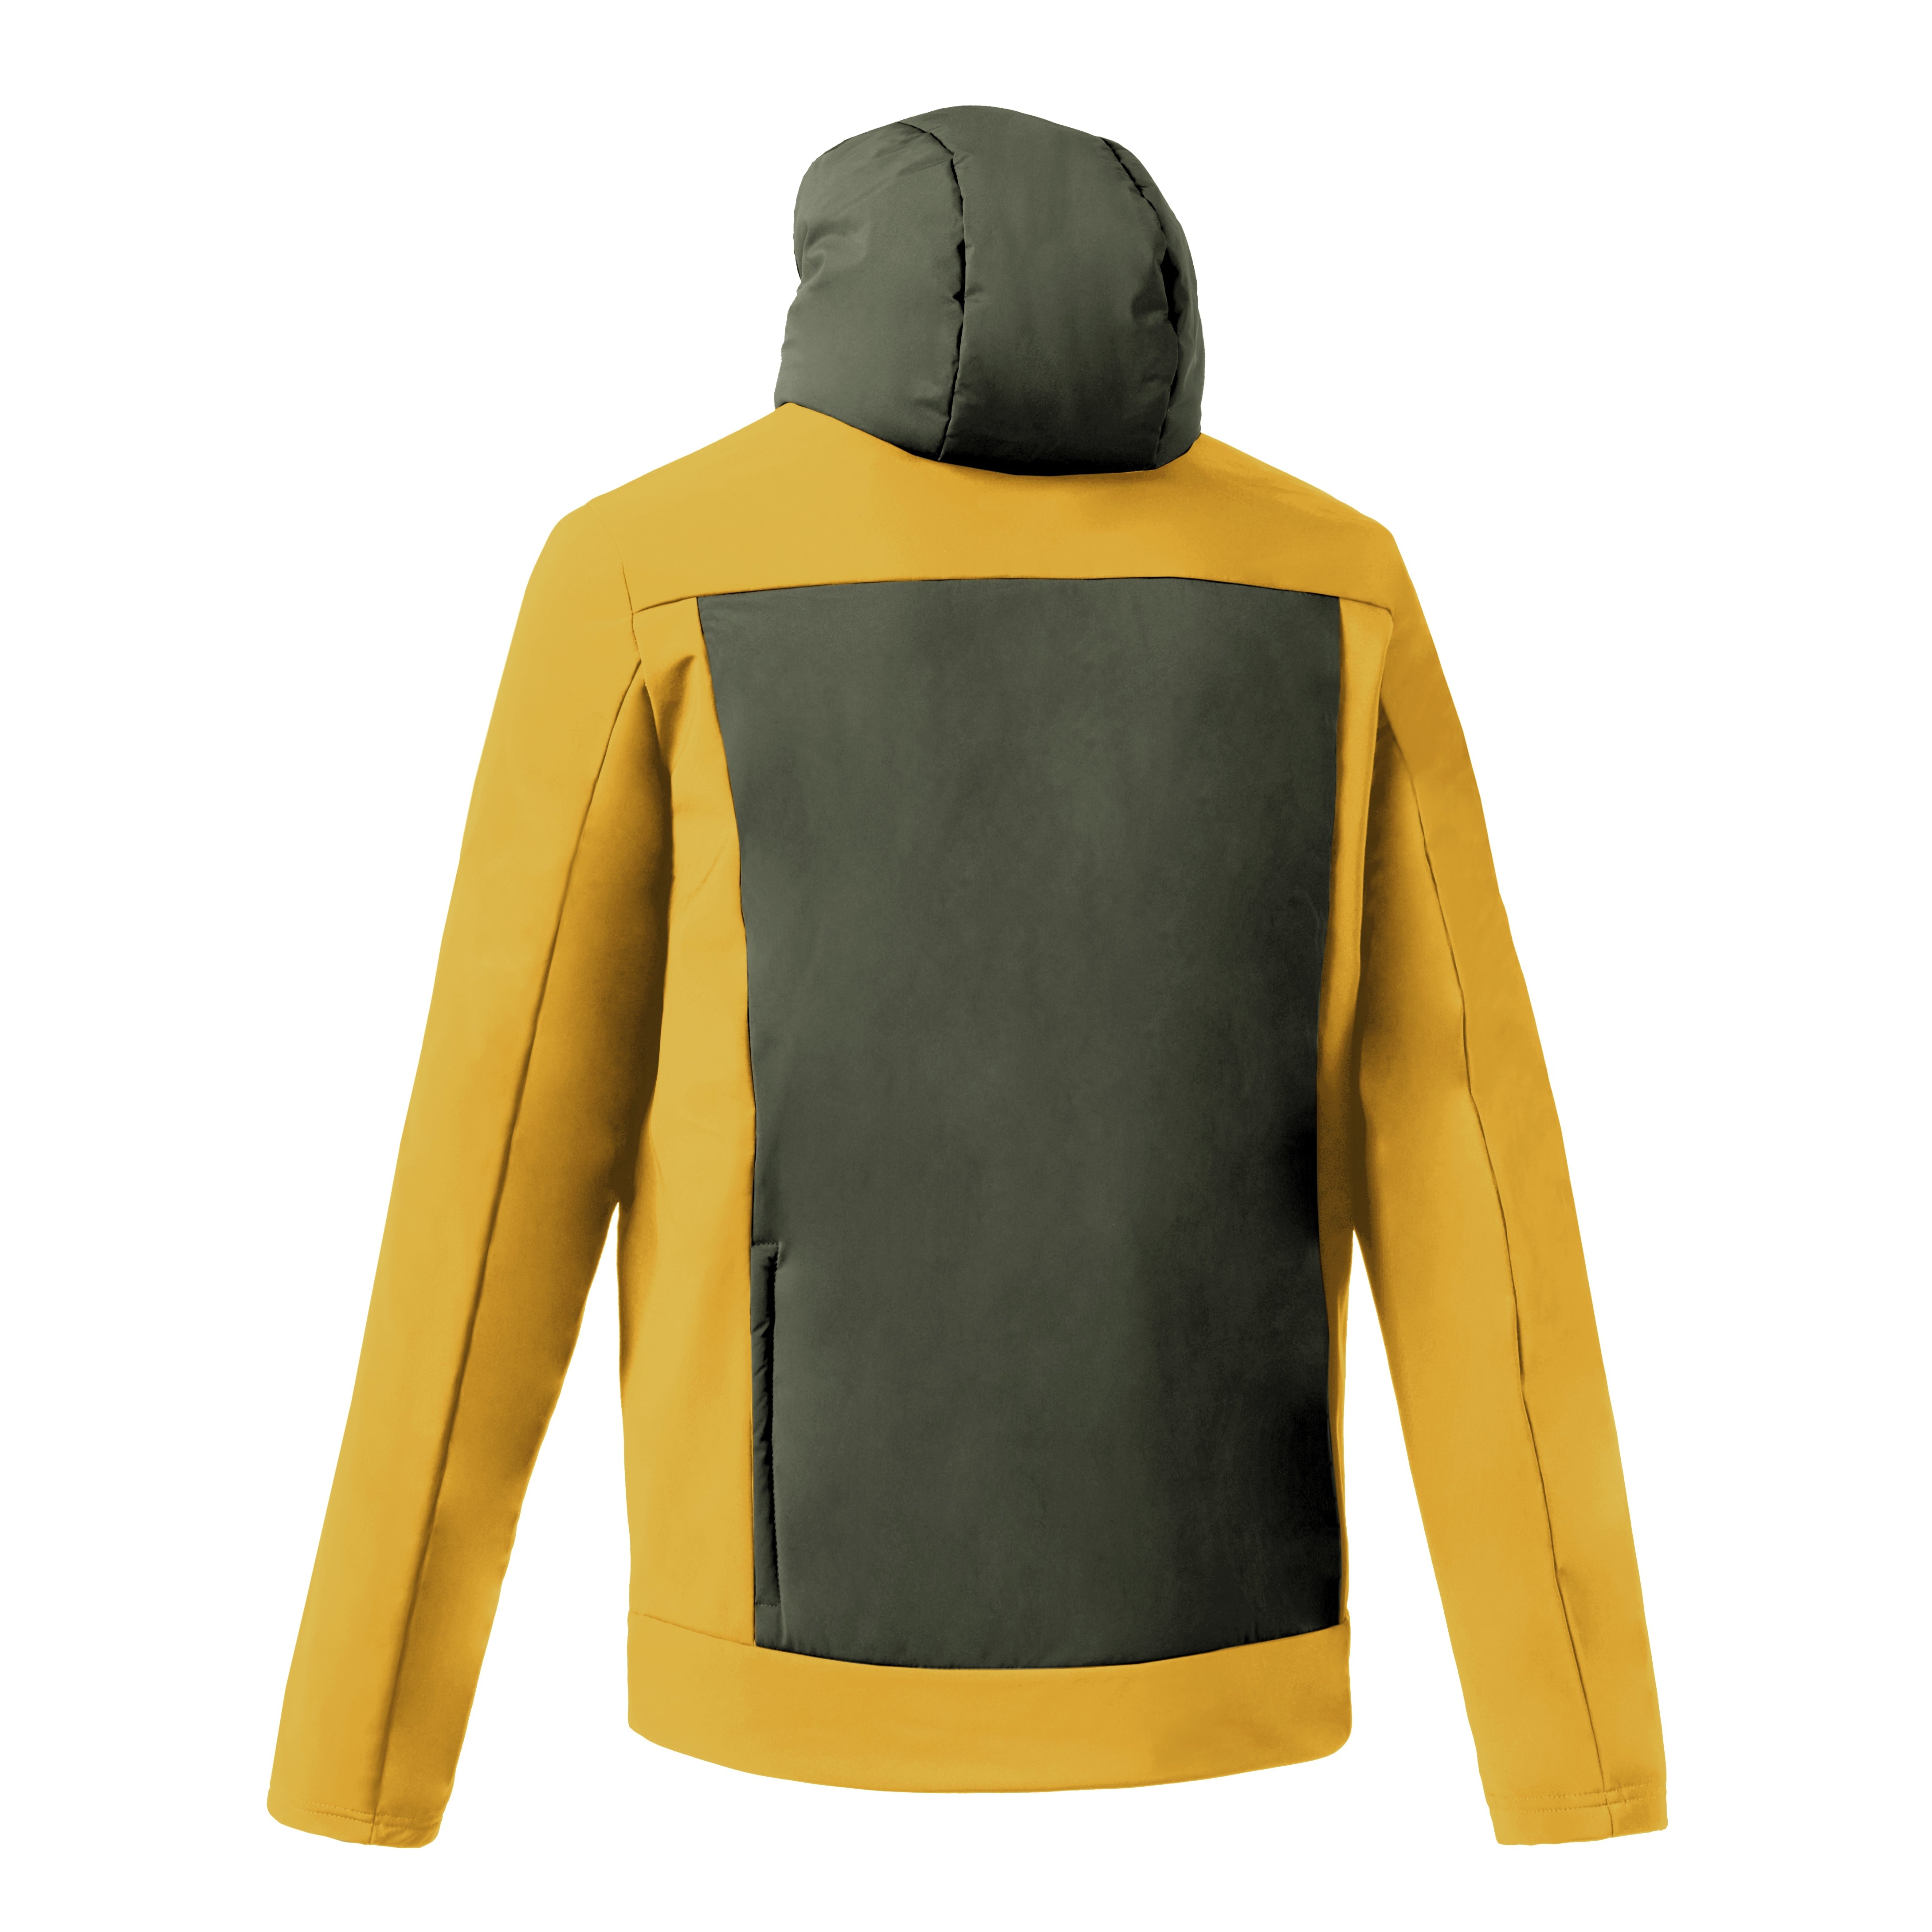 Dotout Altitude jacket - Grun gelb